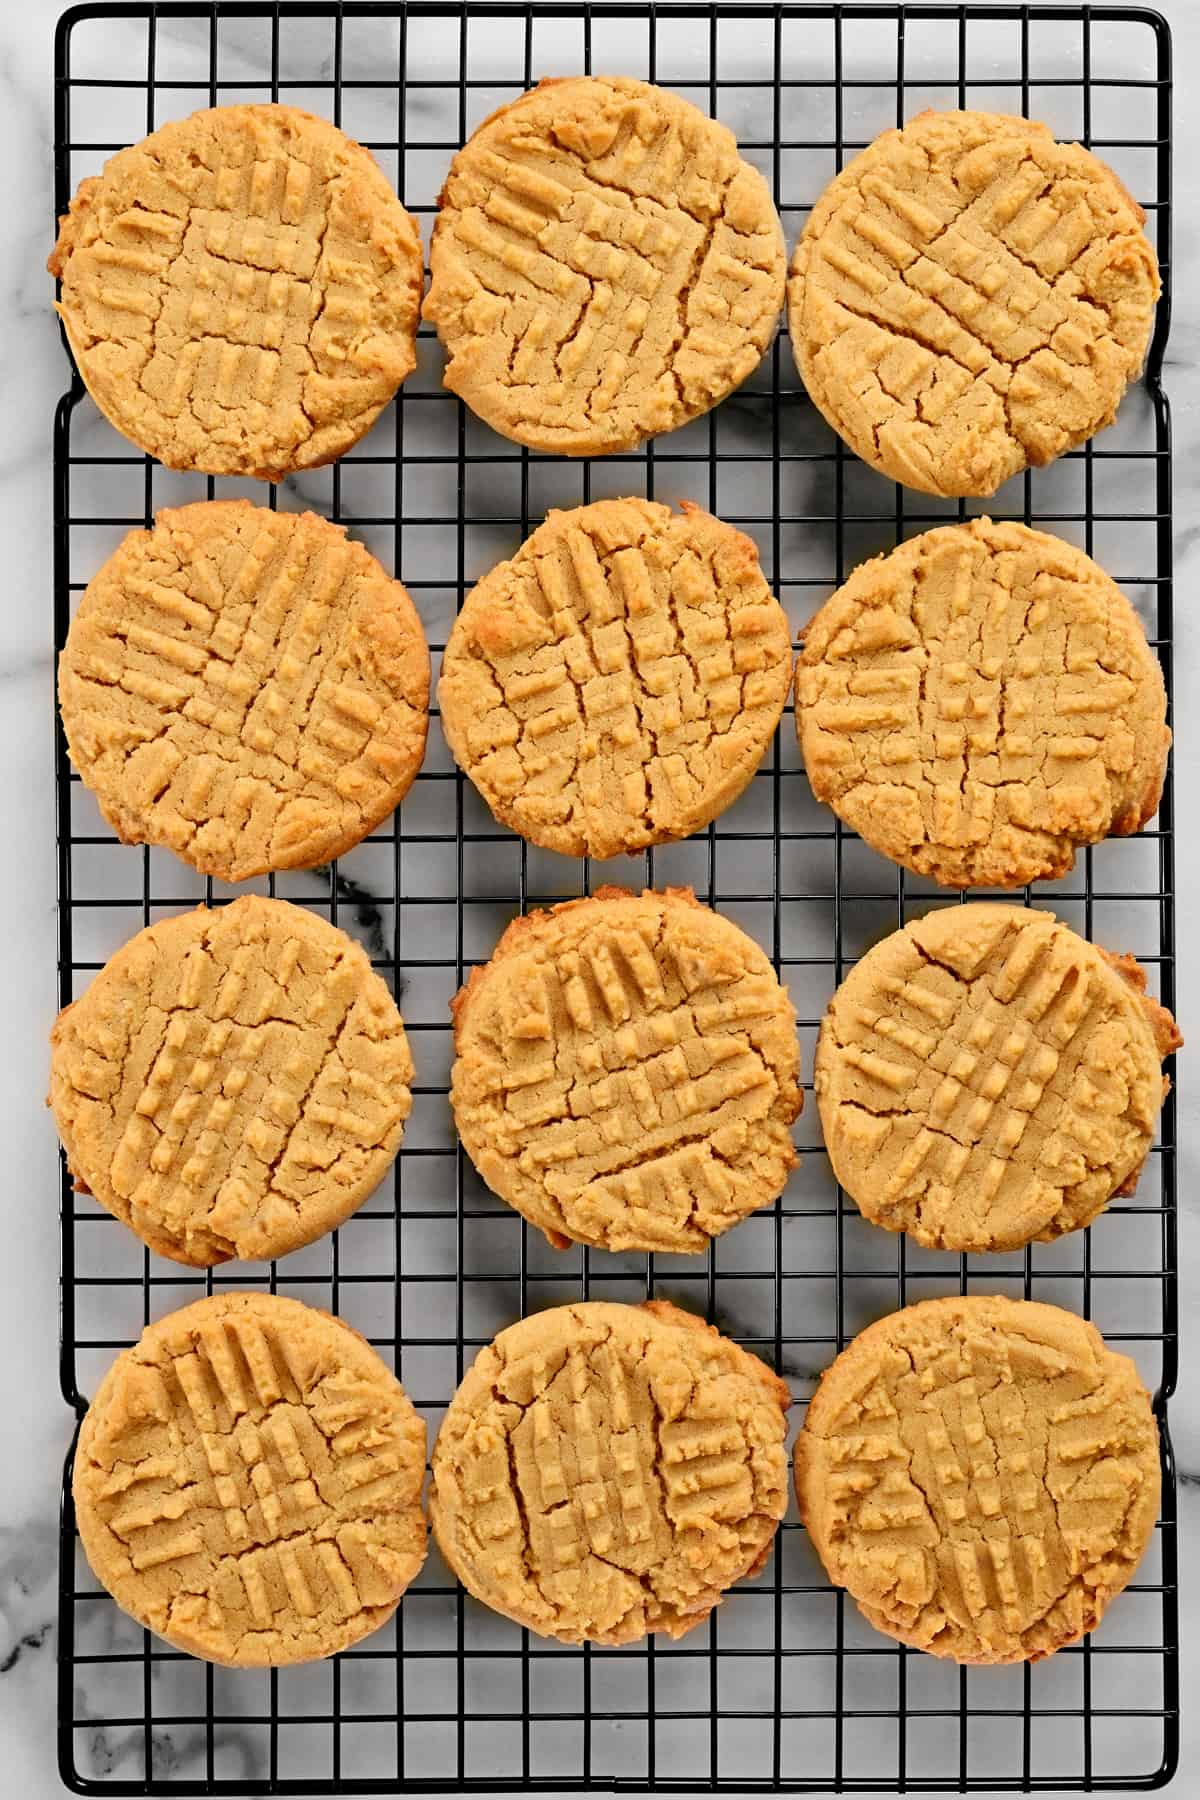 A dozen peanut butter cookies on a wire rack.